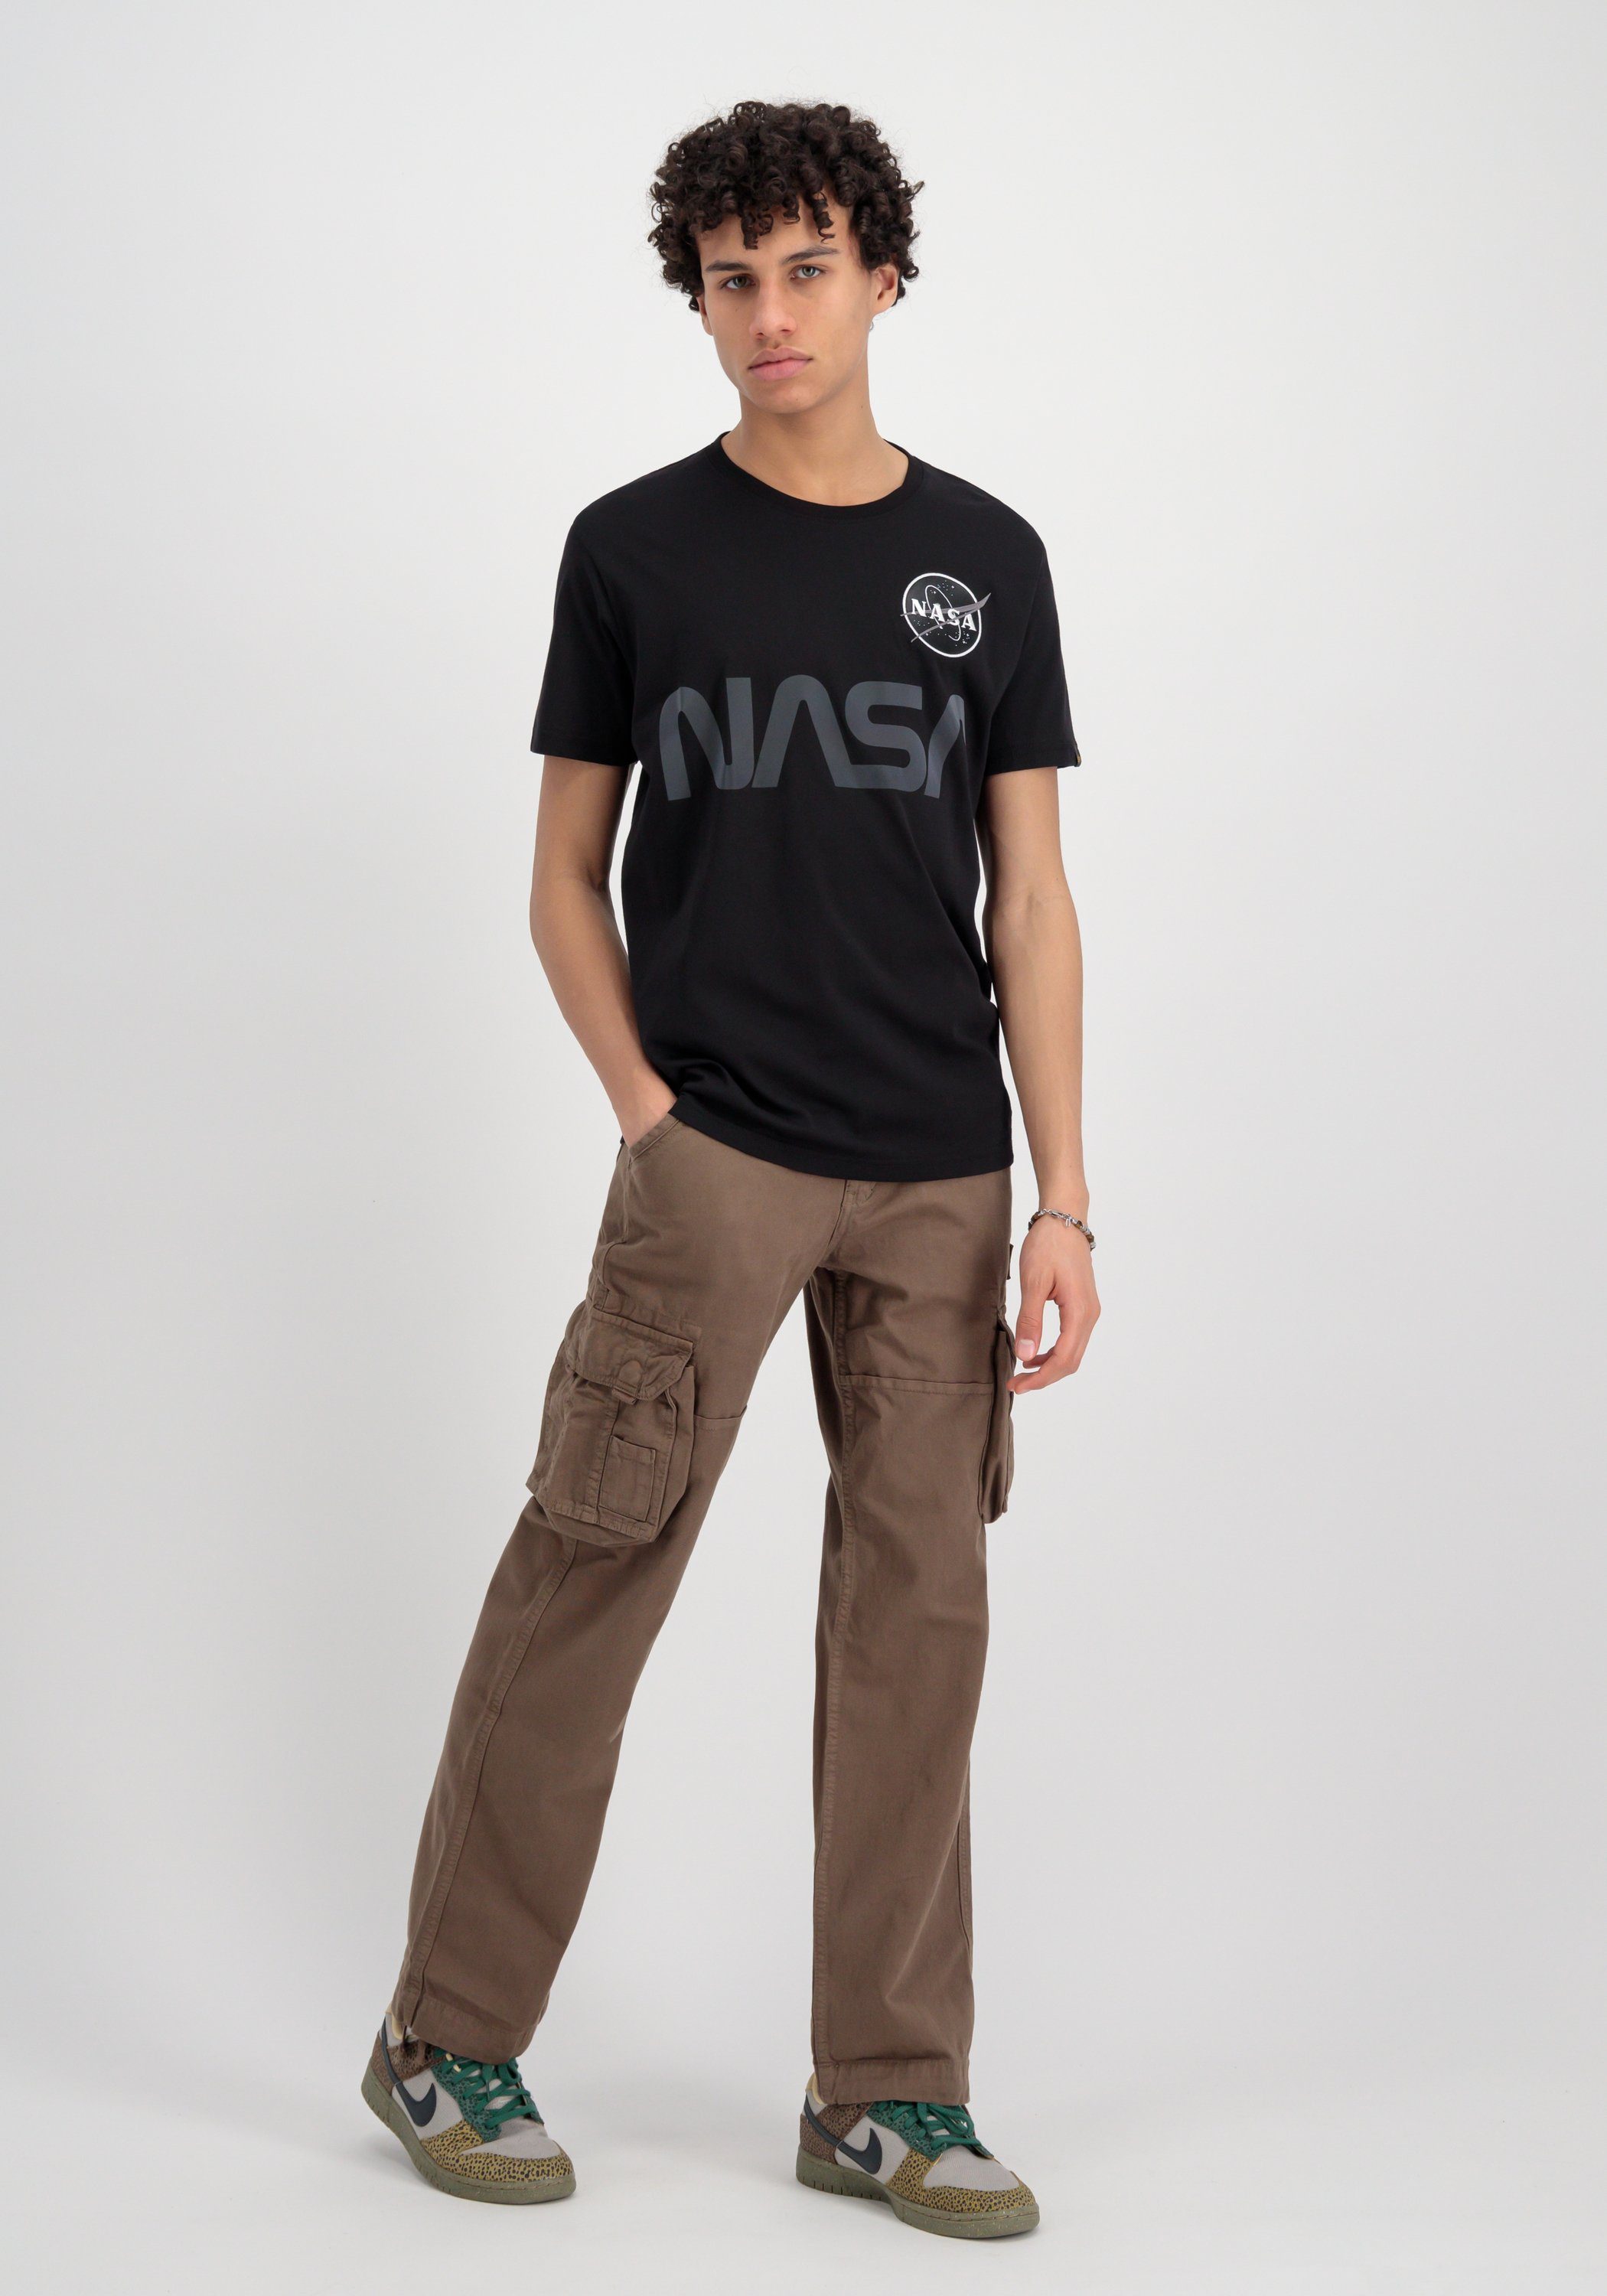 T Ref. - Men black T-Shirt T-Shirts Rainbow NASA Industries Industries Alpha Alpha